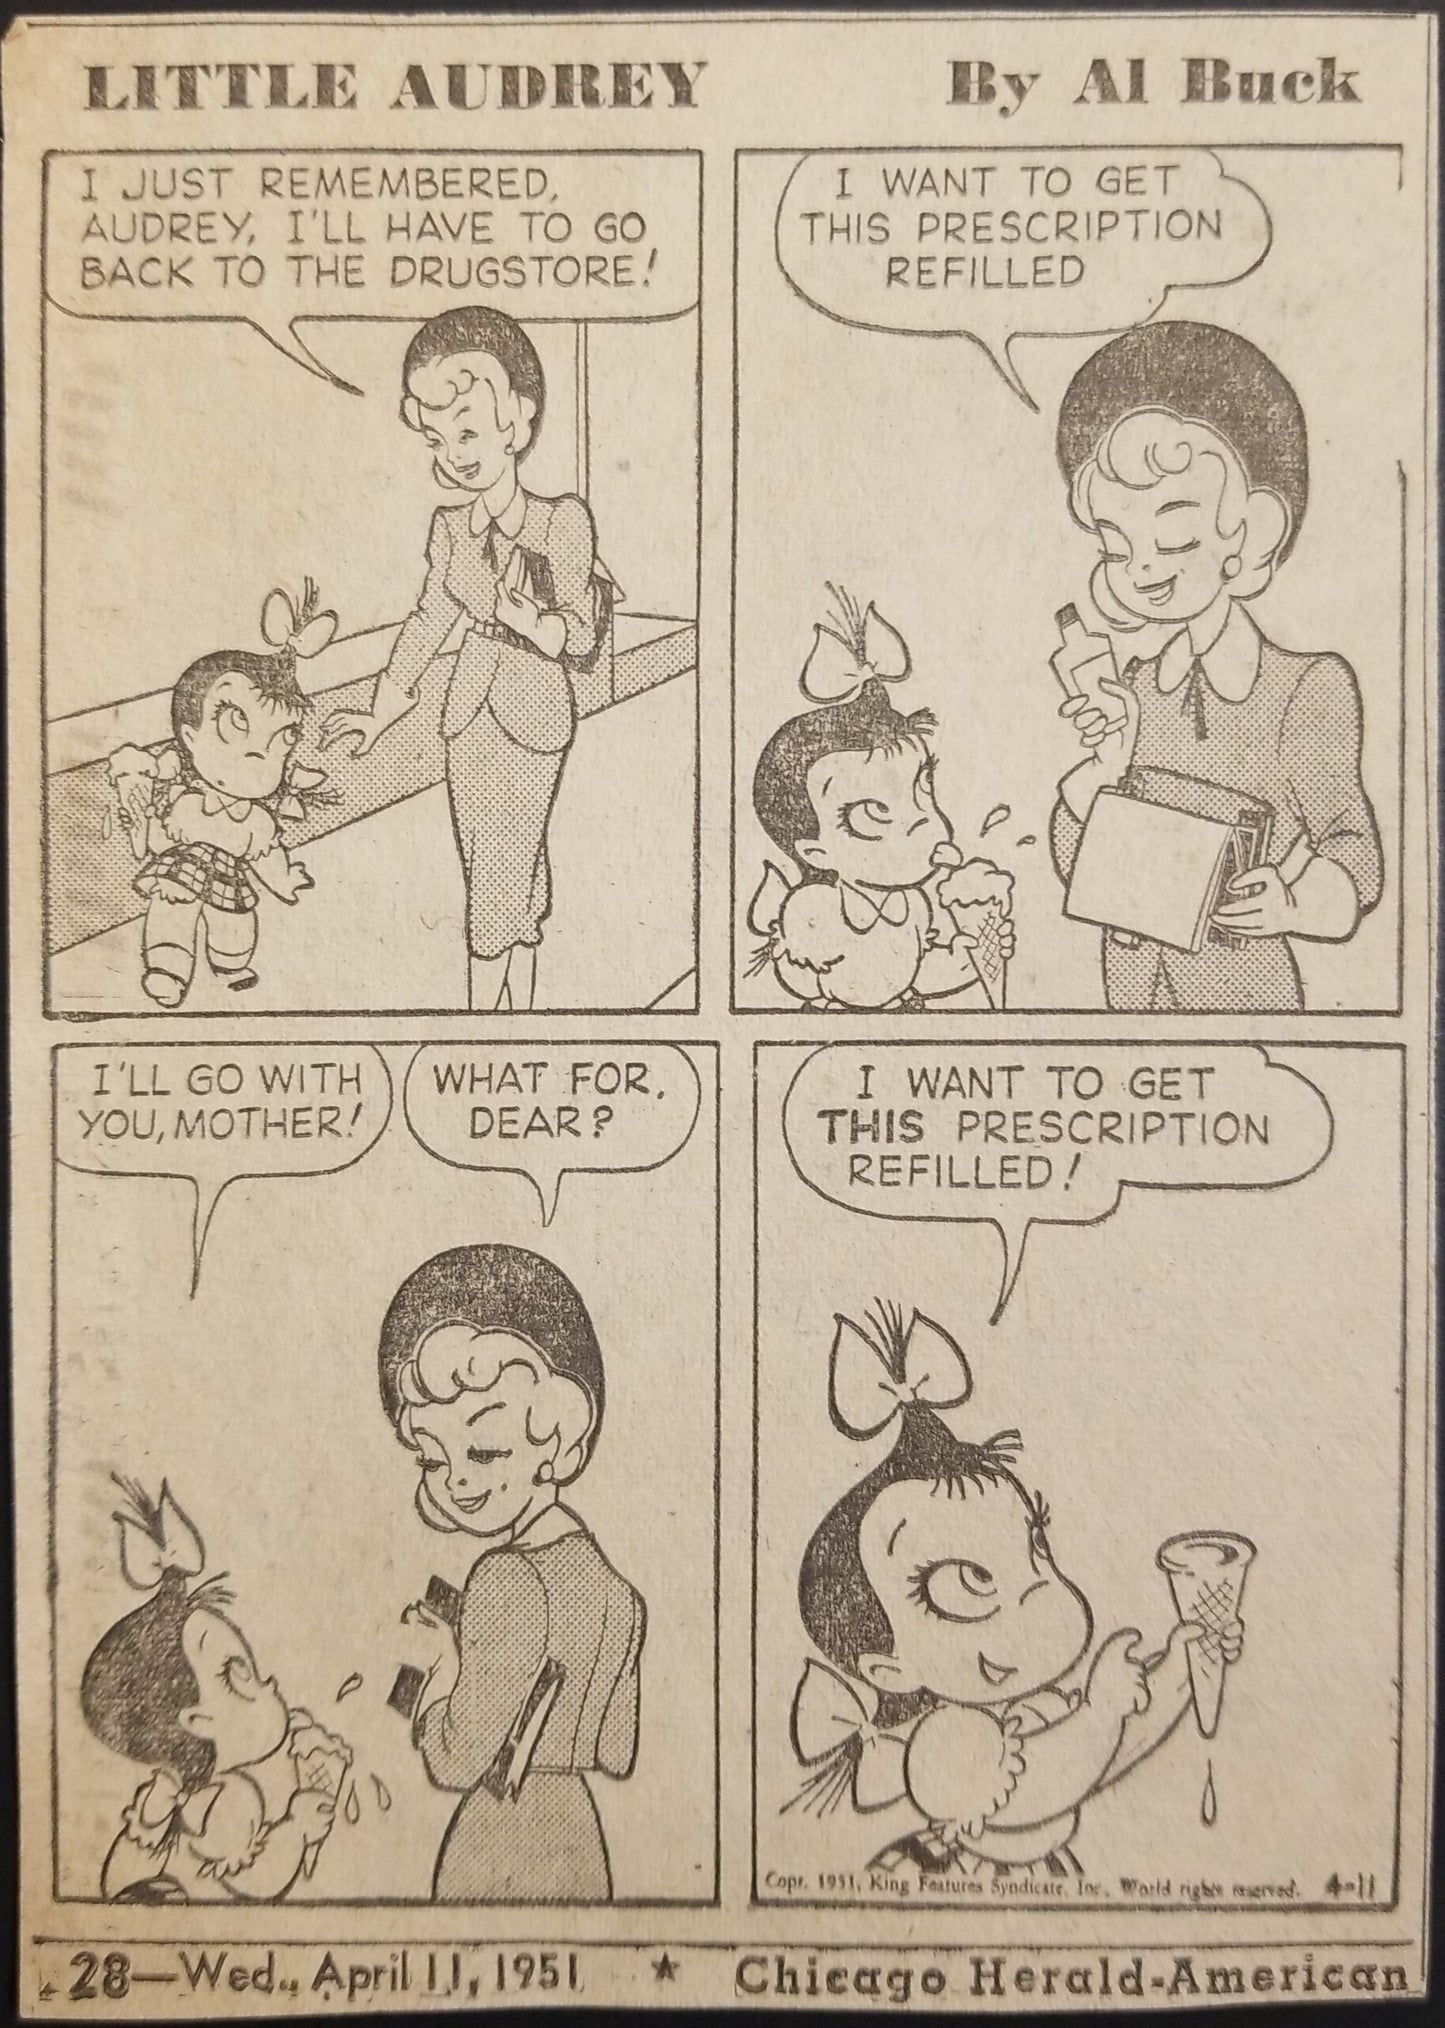 1951 Little Audrey Comic Strip - Al Buck - Chicago Herald American Newspaper - April 11 - 1950's Housewife Prescription Drug Epidemic Social Commentary